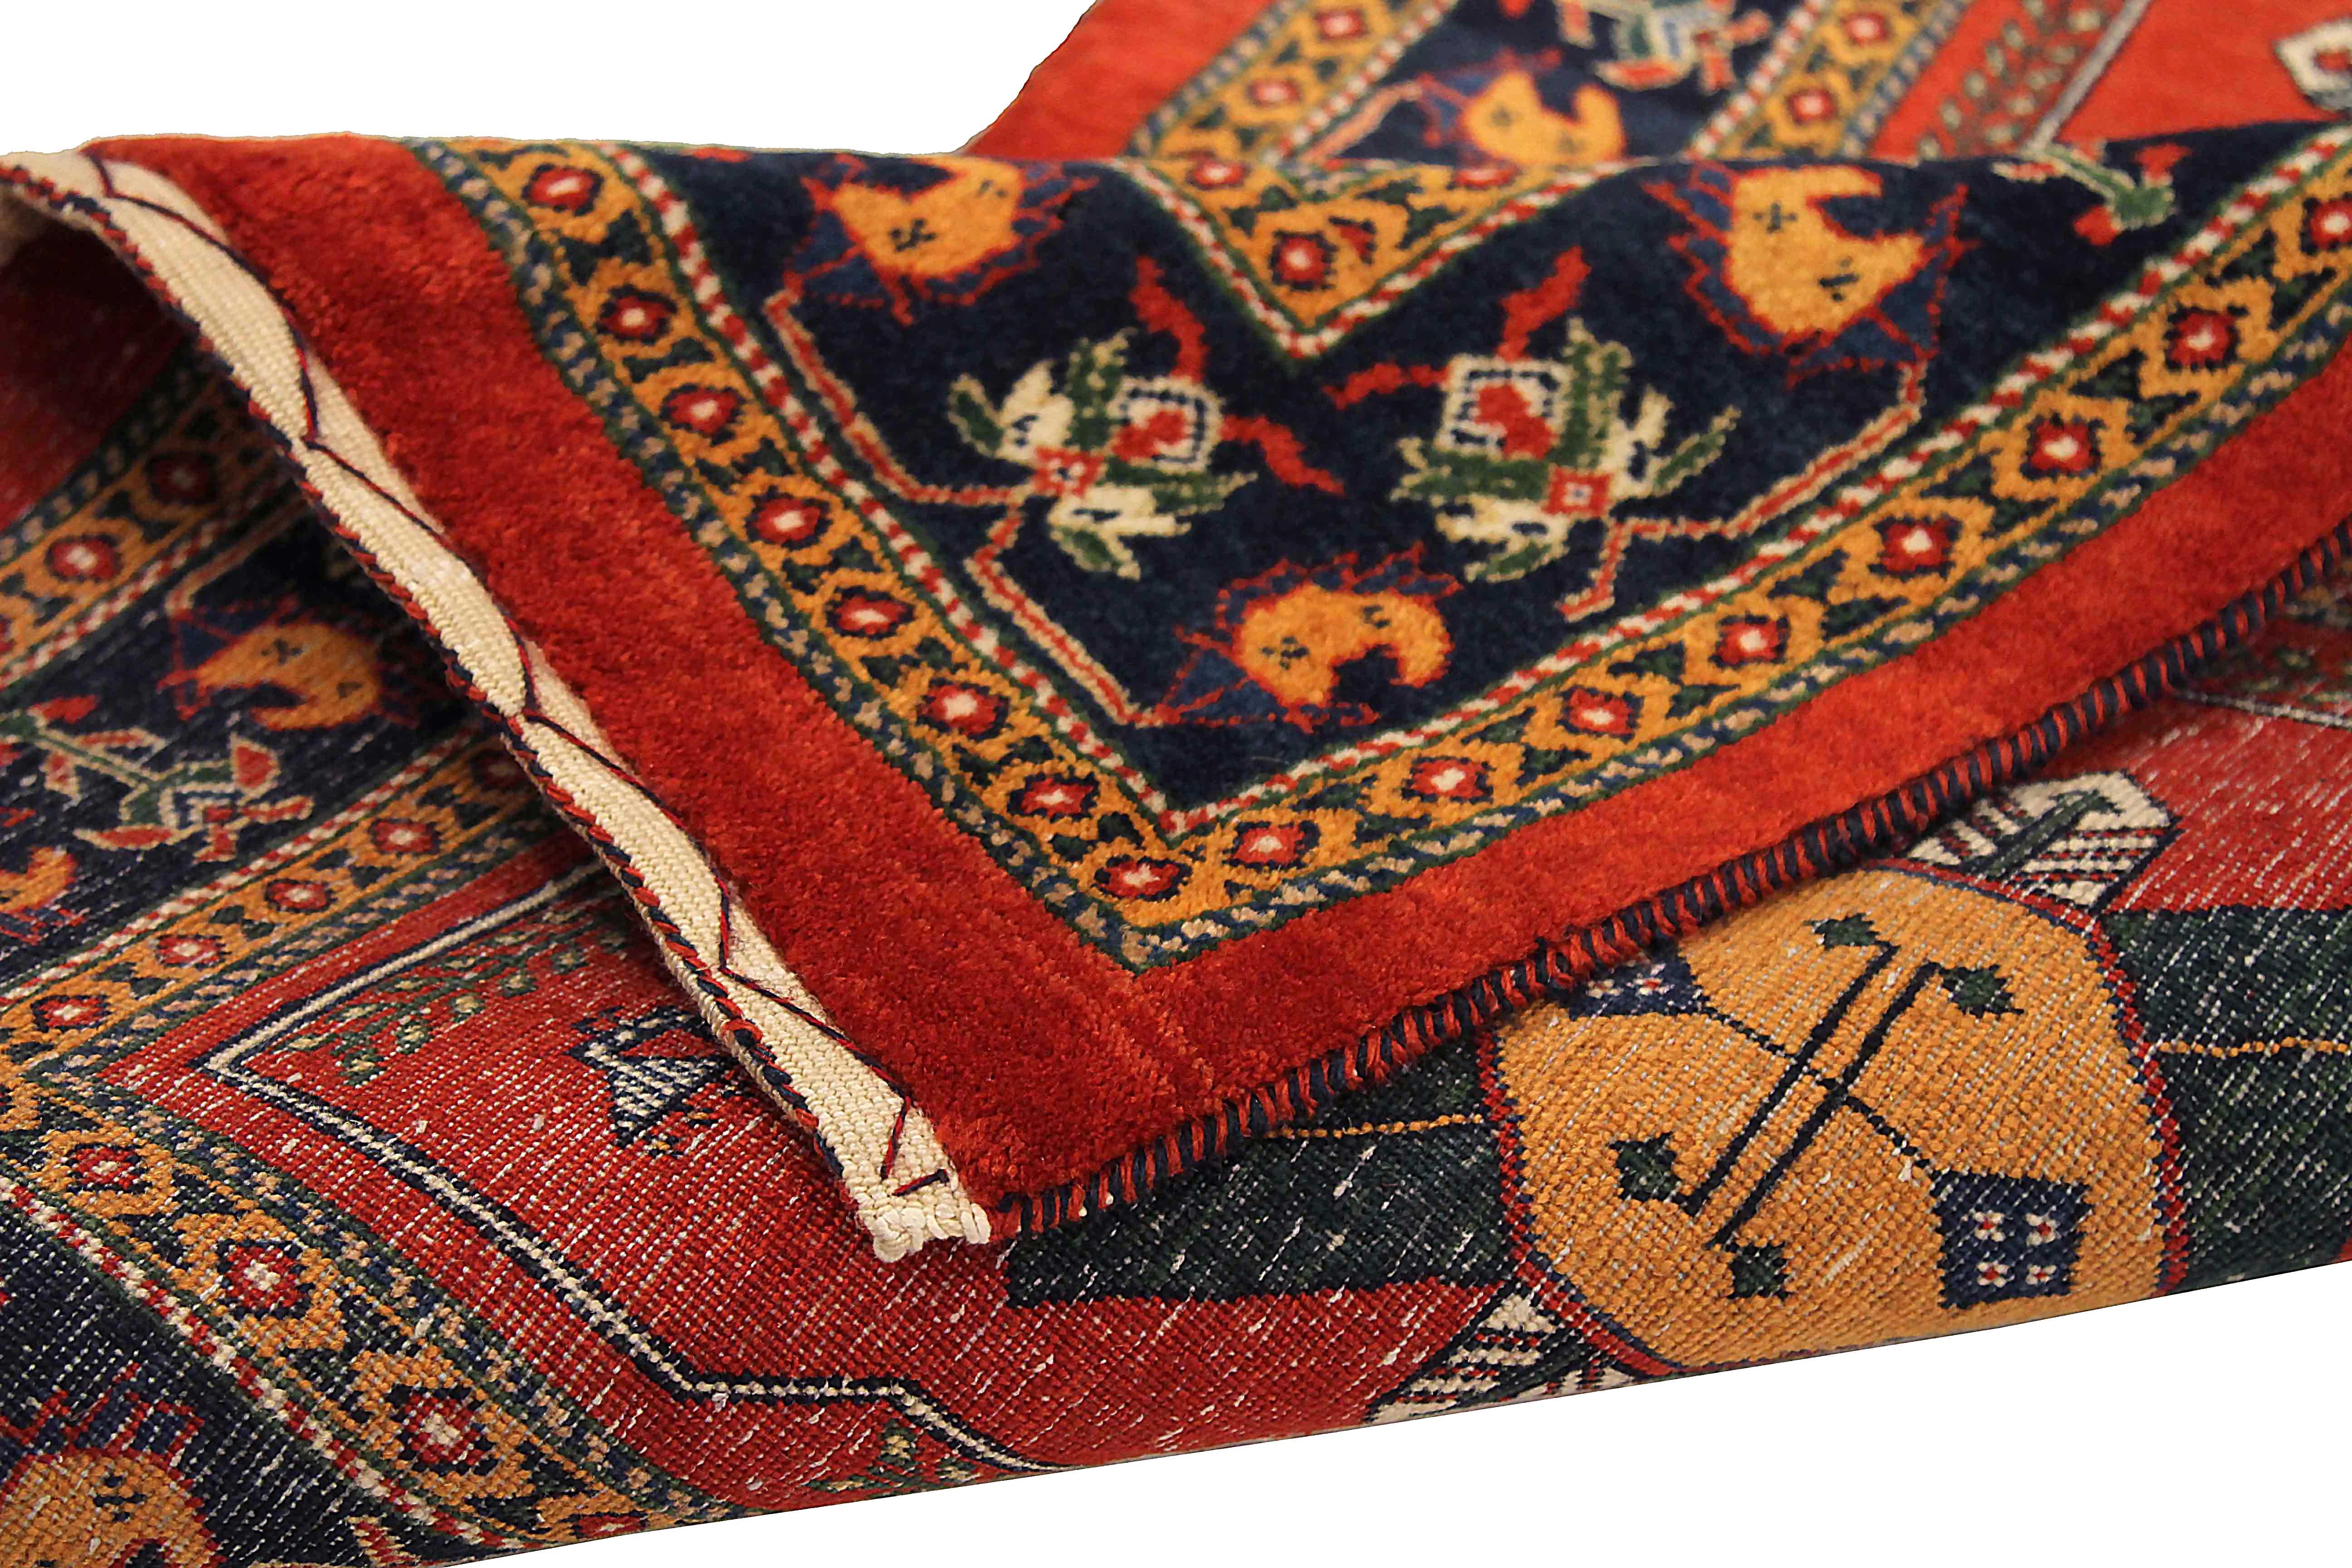 Hand-Woven Antique Persian Runner Rug Gabbeh Design For Sale